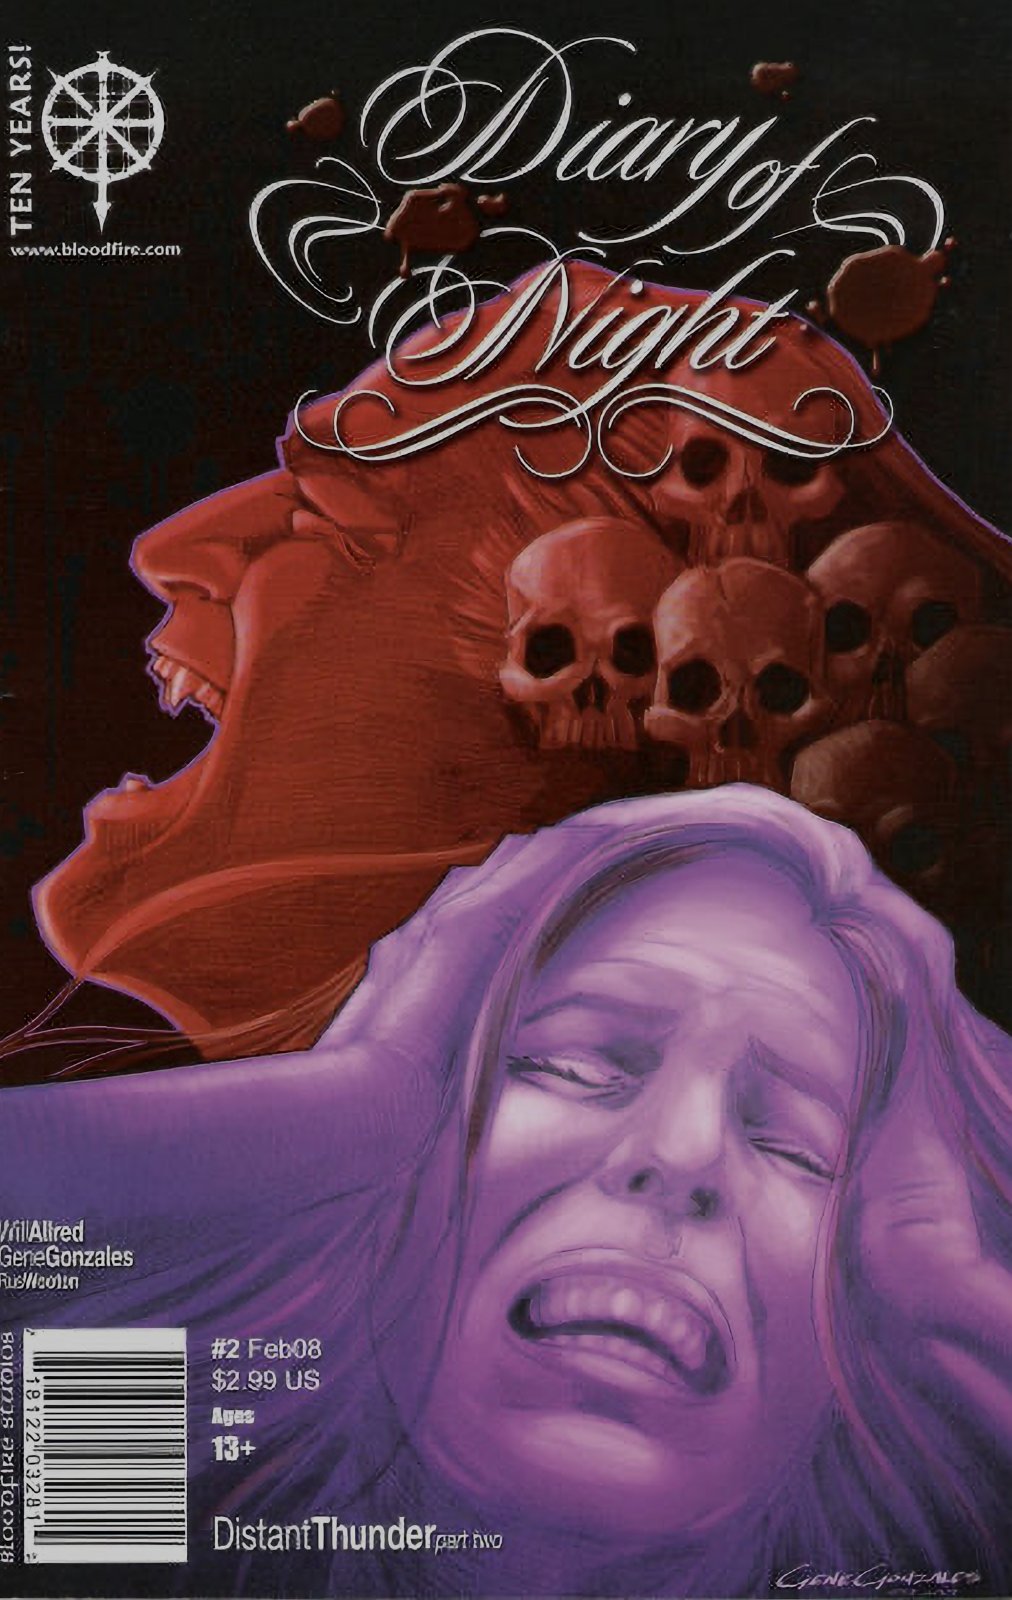 Diary of Night #2 (2008) Bloodfire Studios Comics